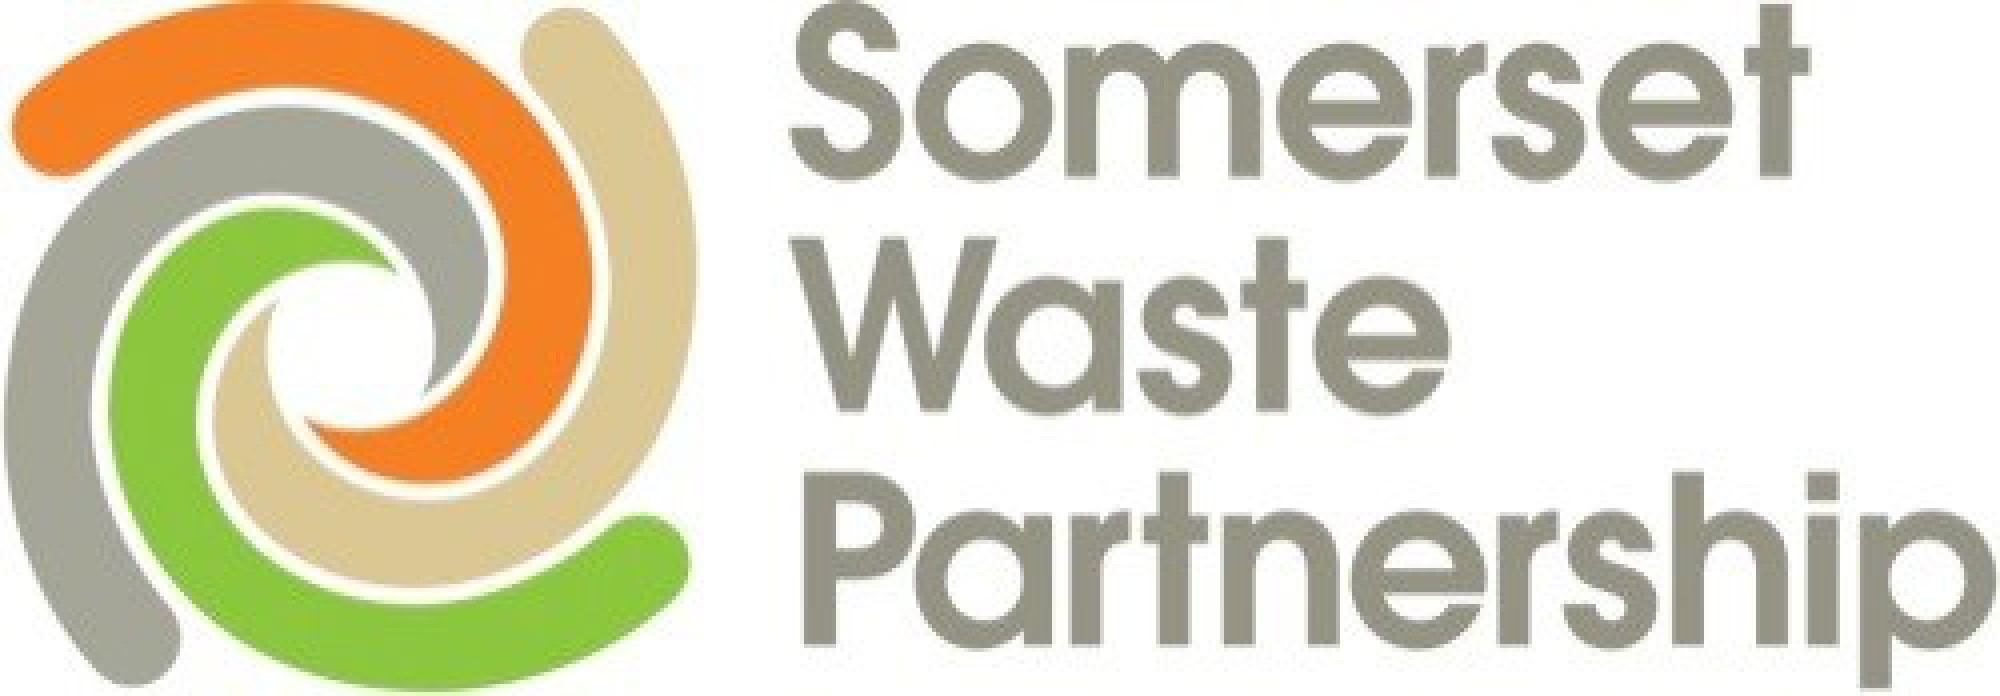 Somerset Waste Partnership update 14.7.21